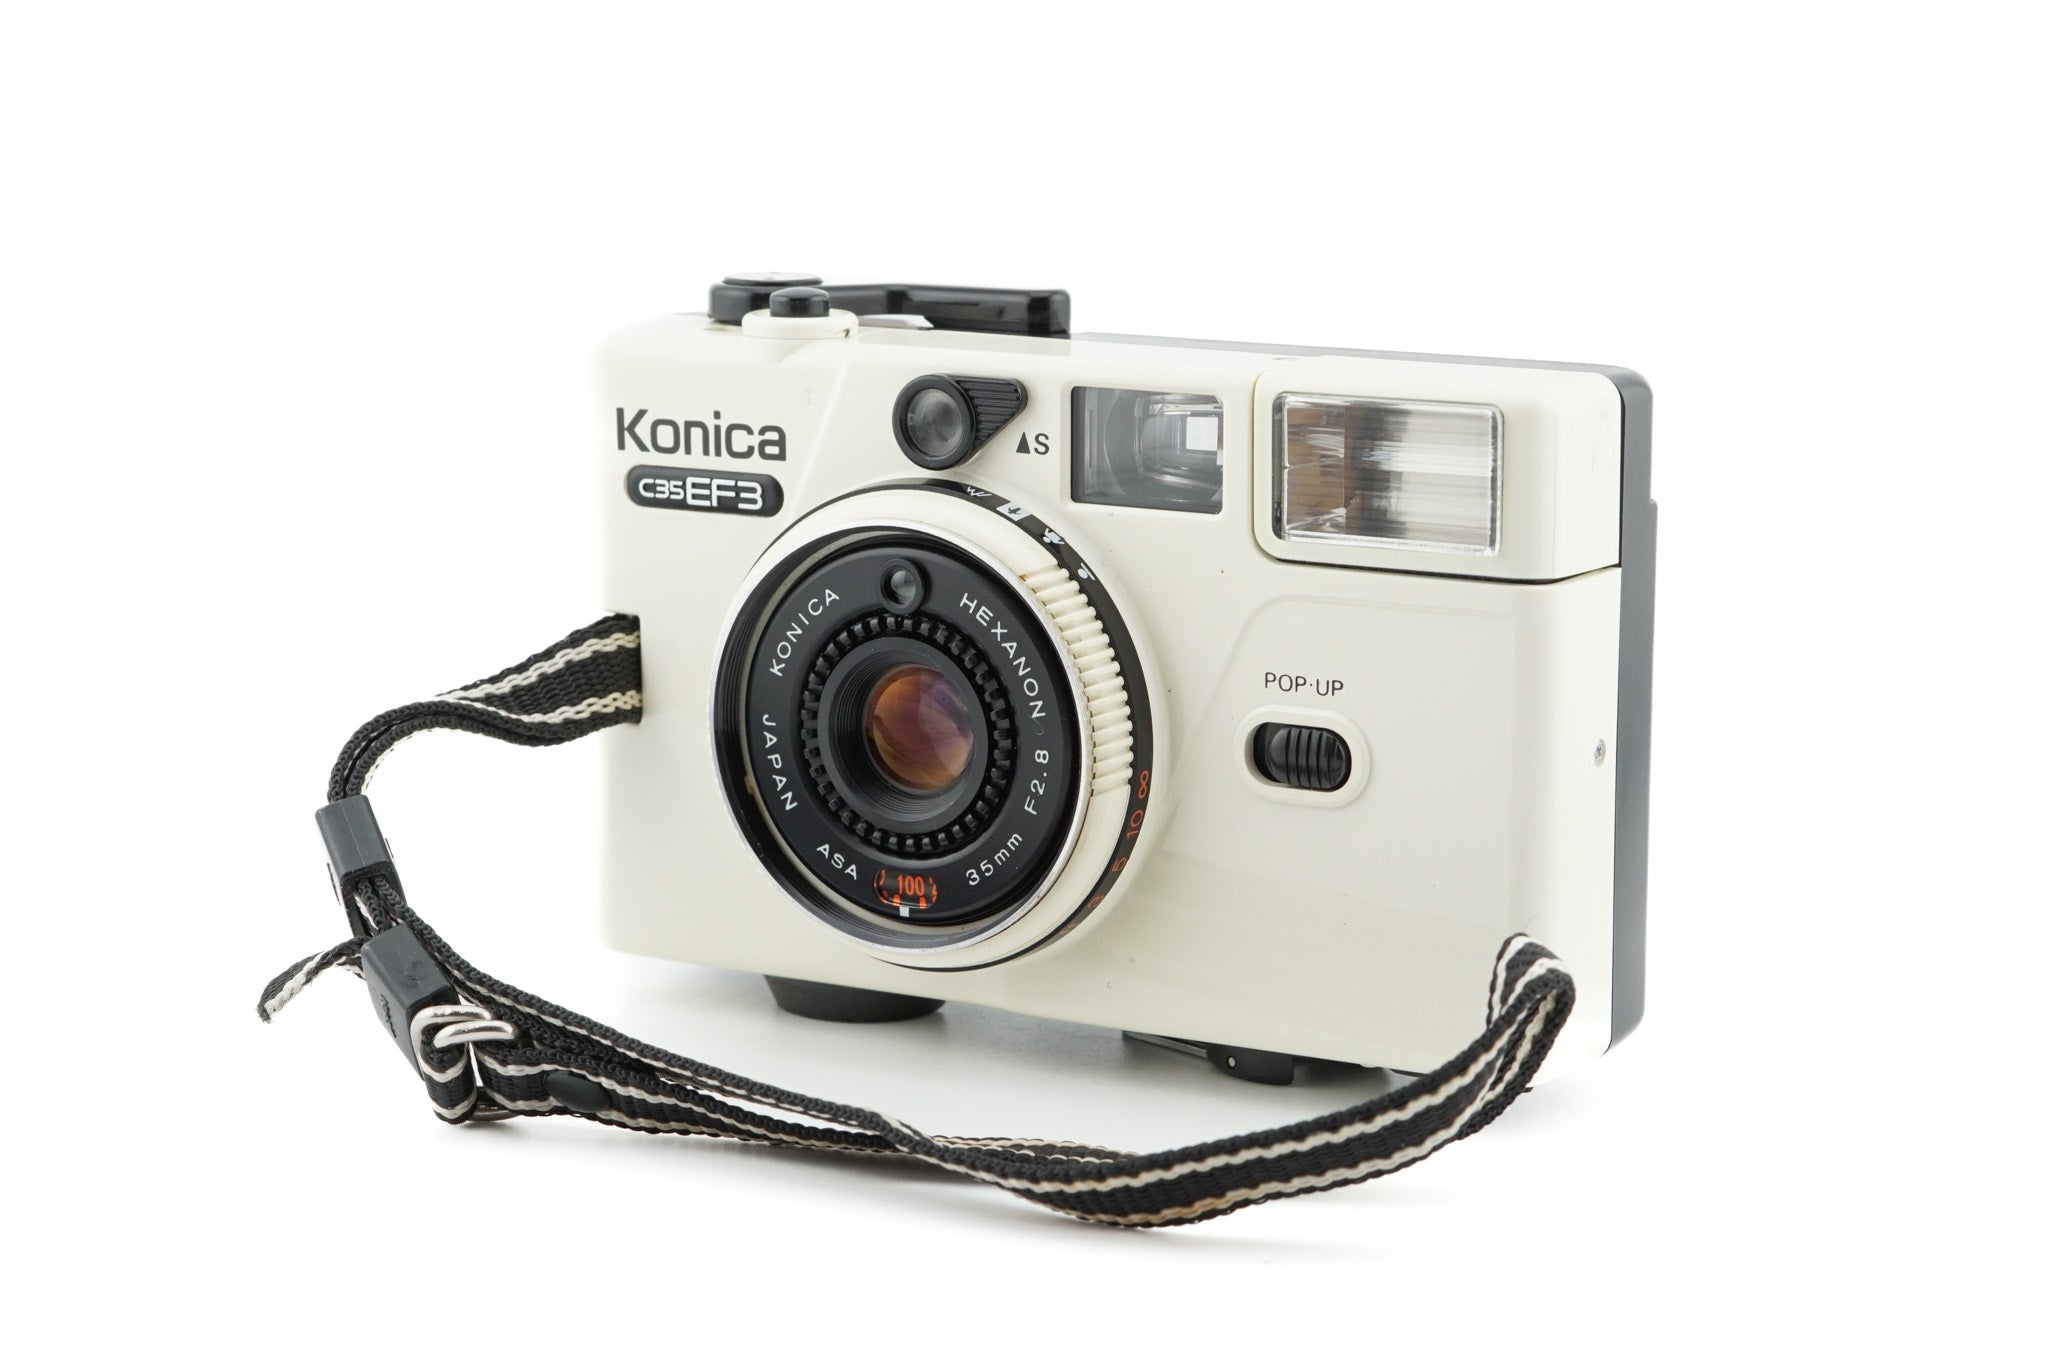 Konica C35 EF3 - Camera – Kamerastore